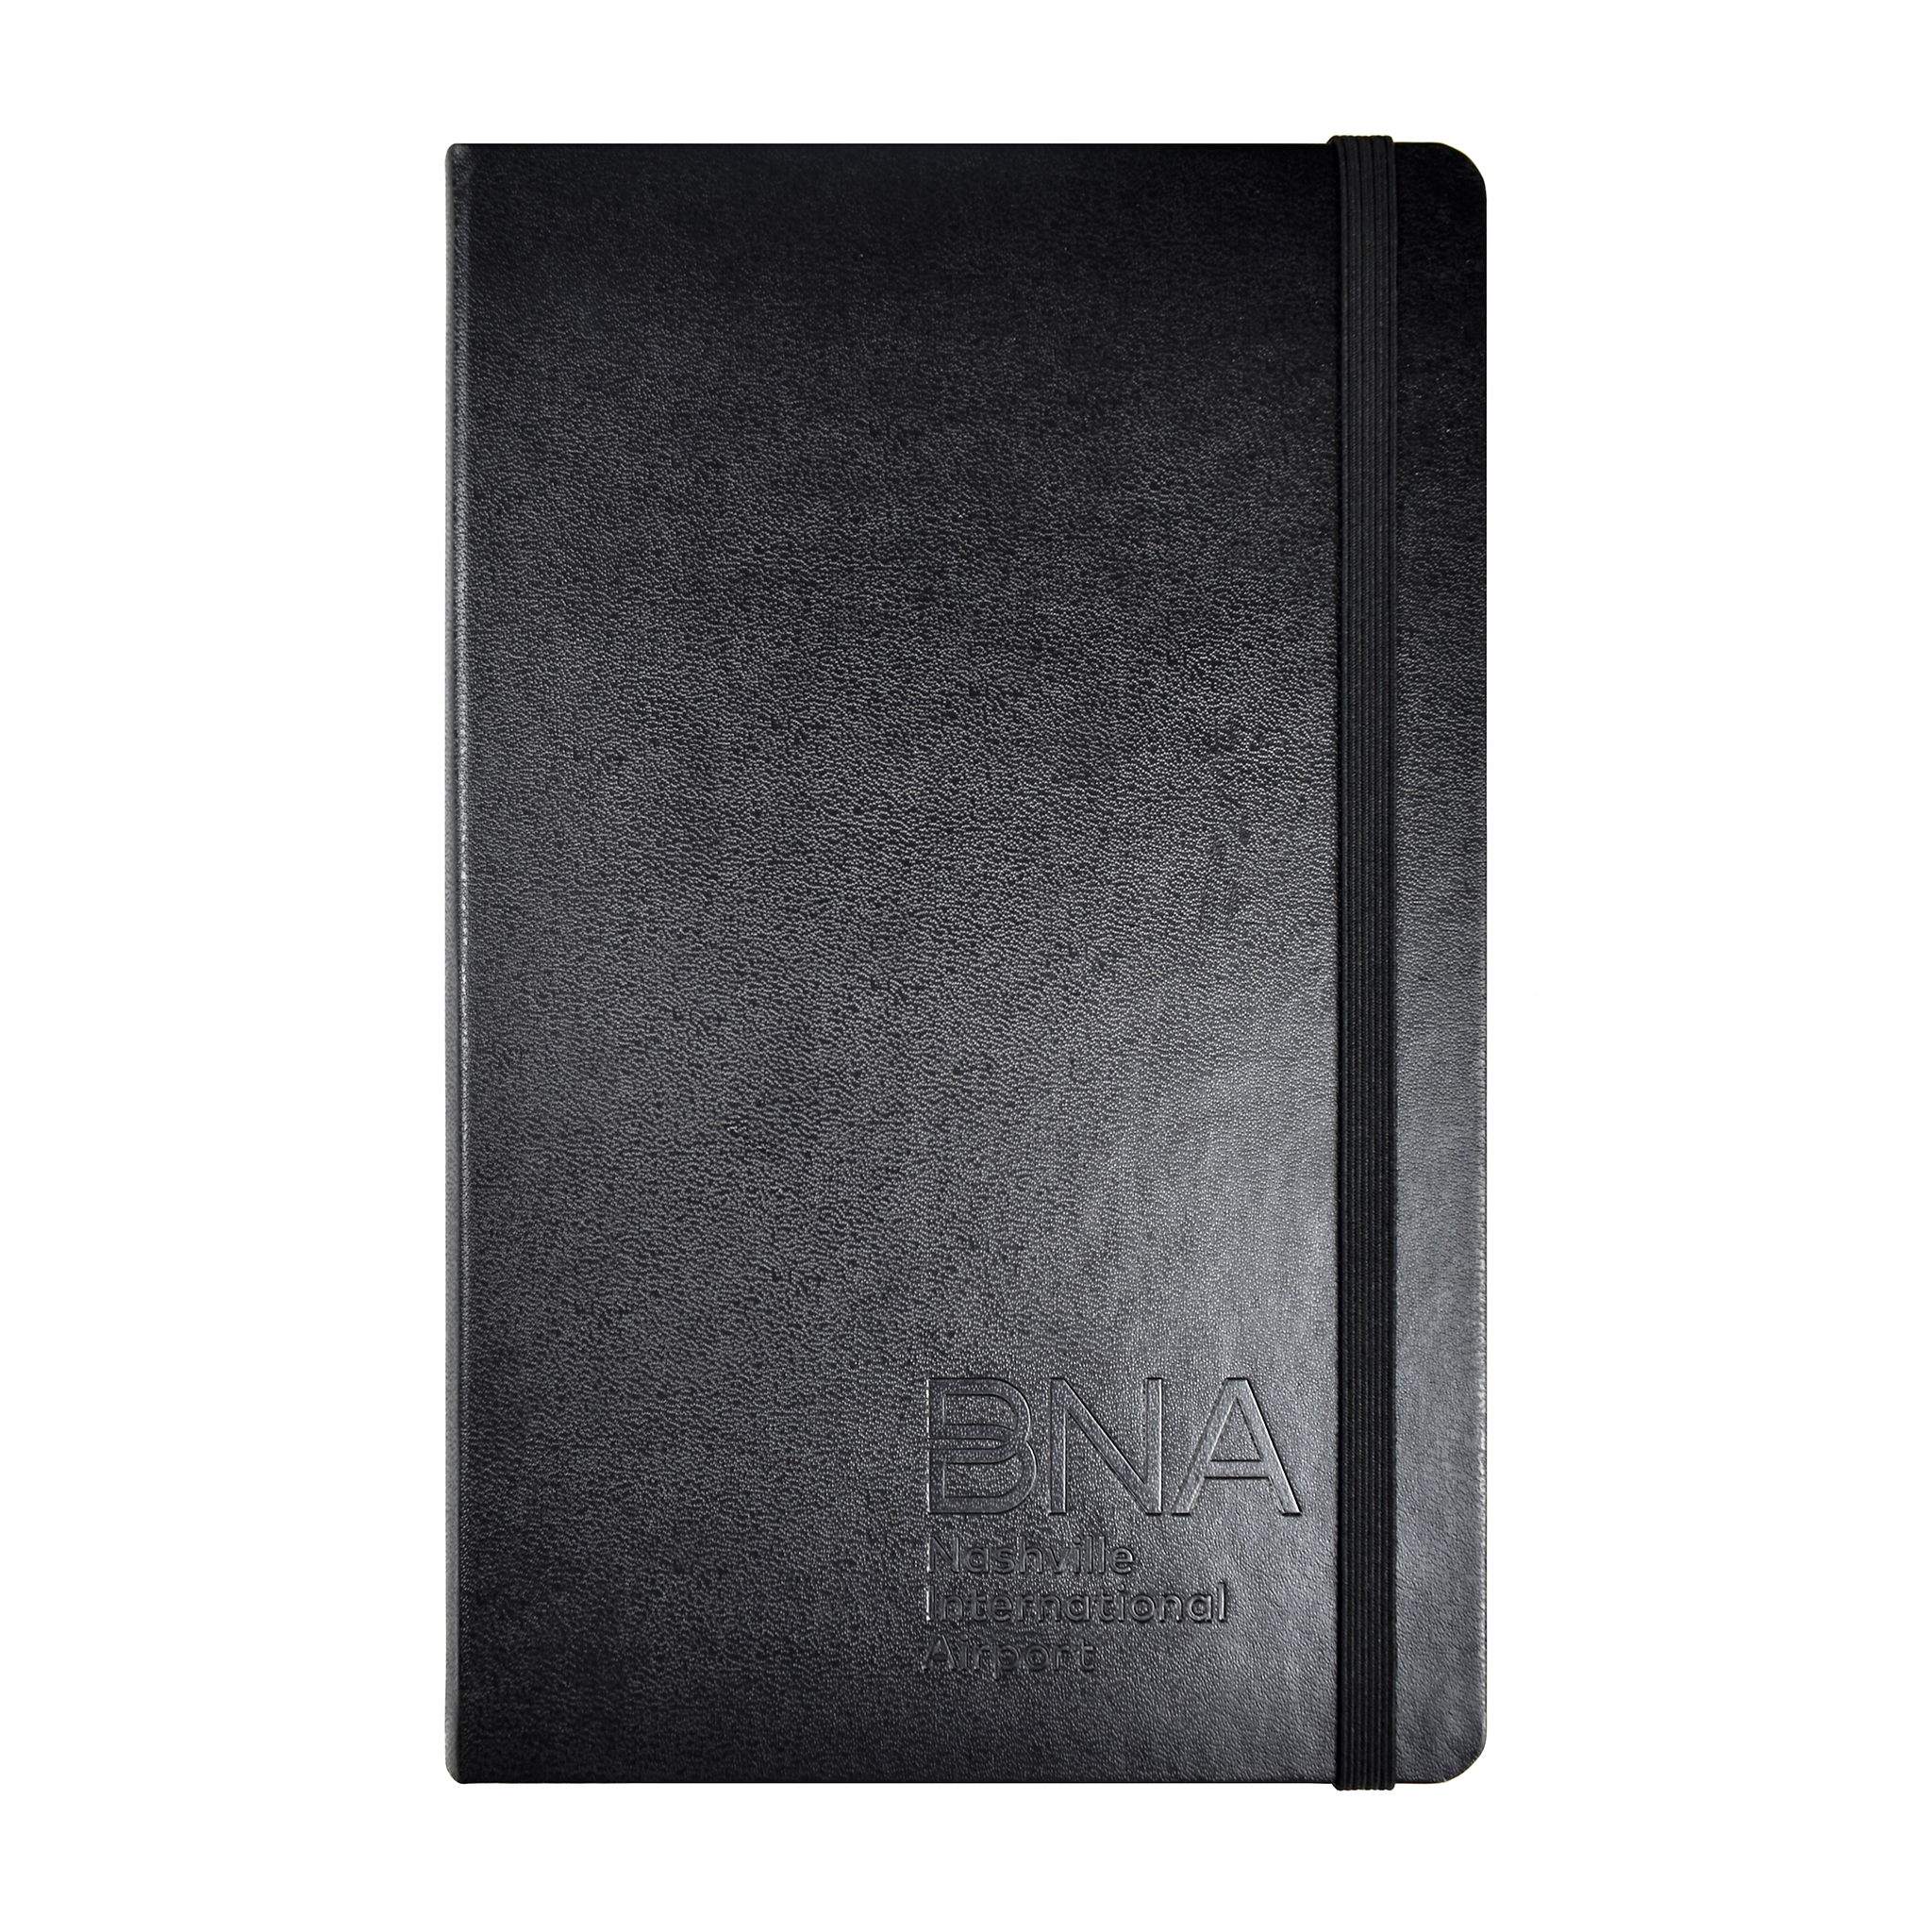 Full view of BNA embossed classic black Moleskine notebook.